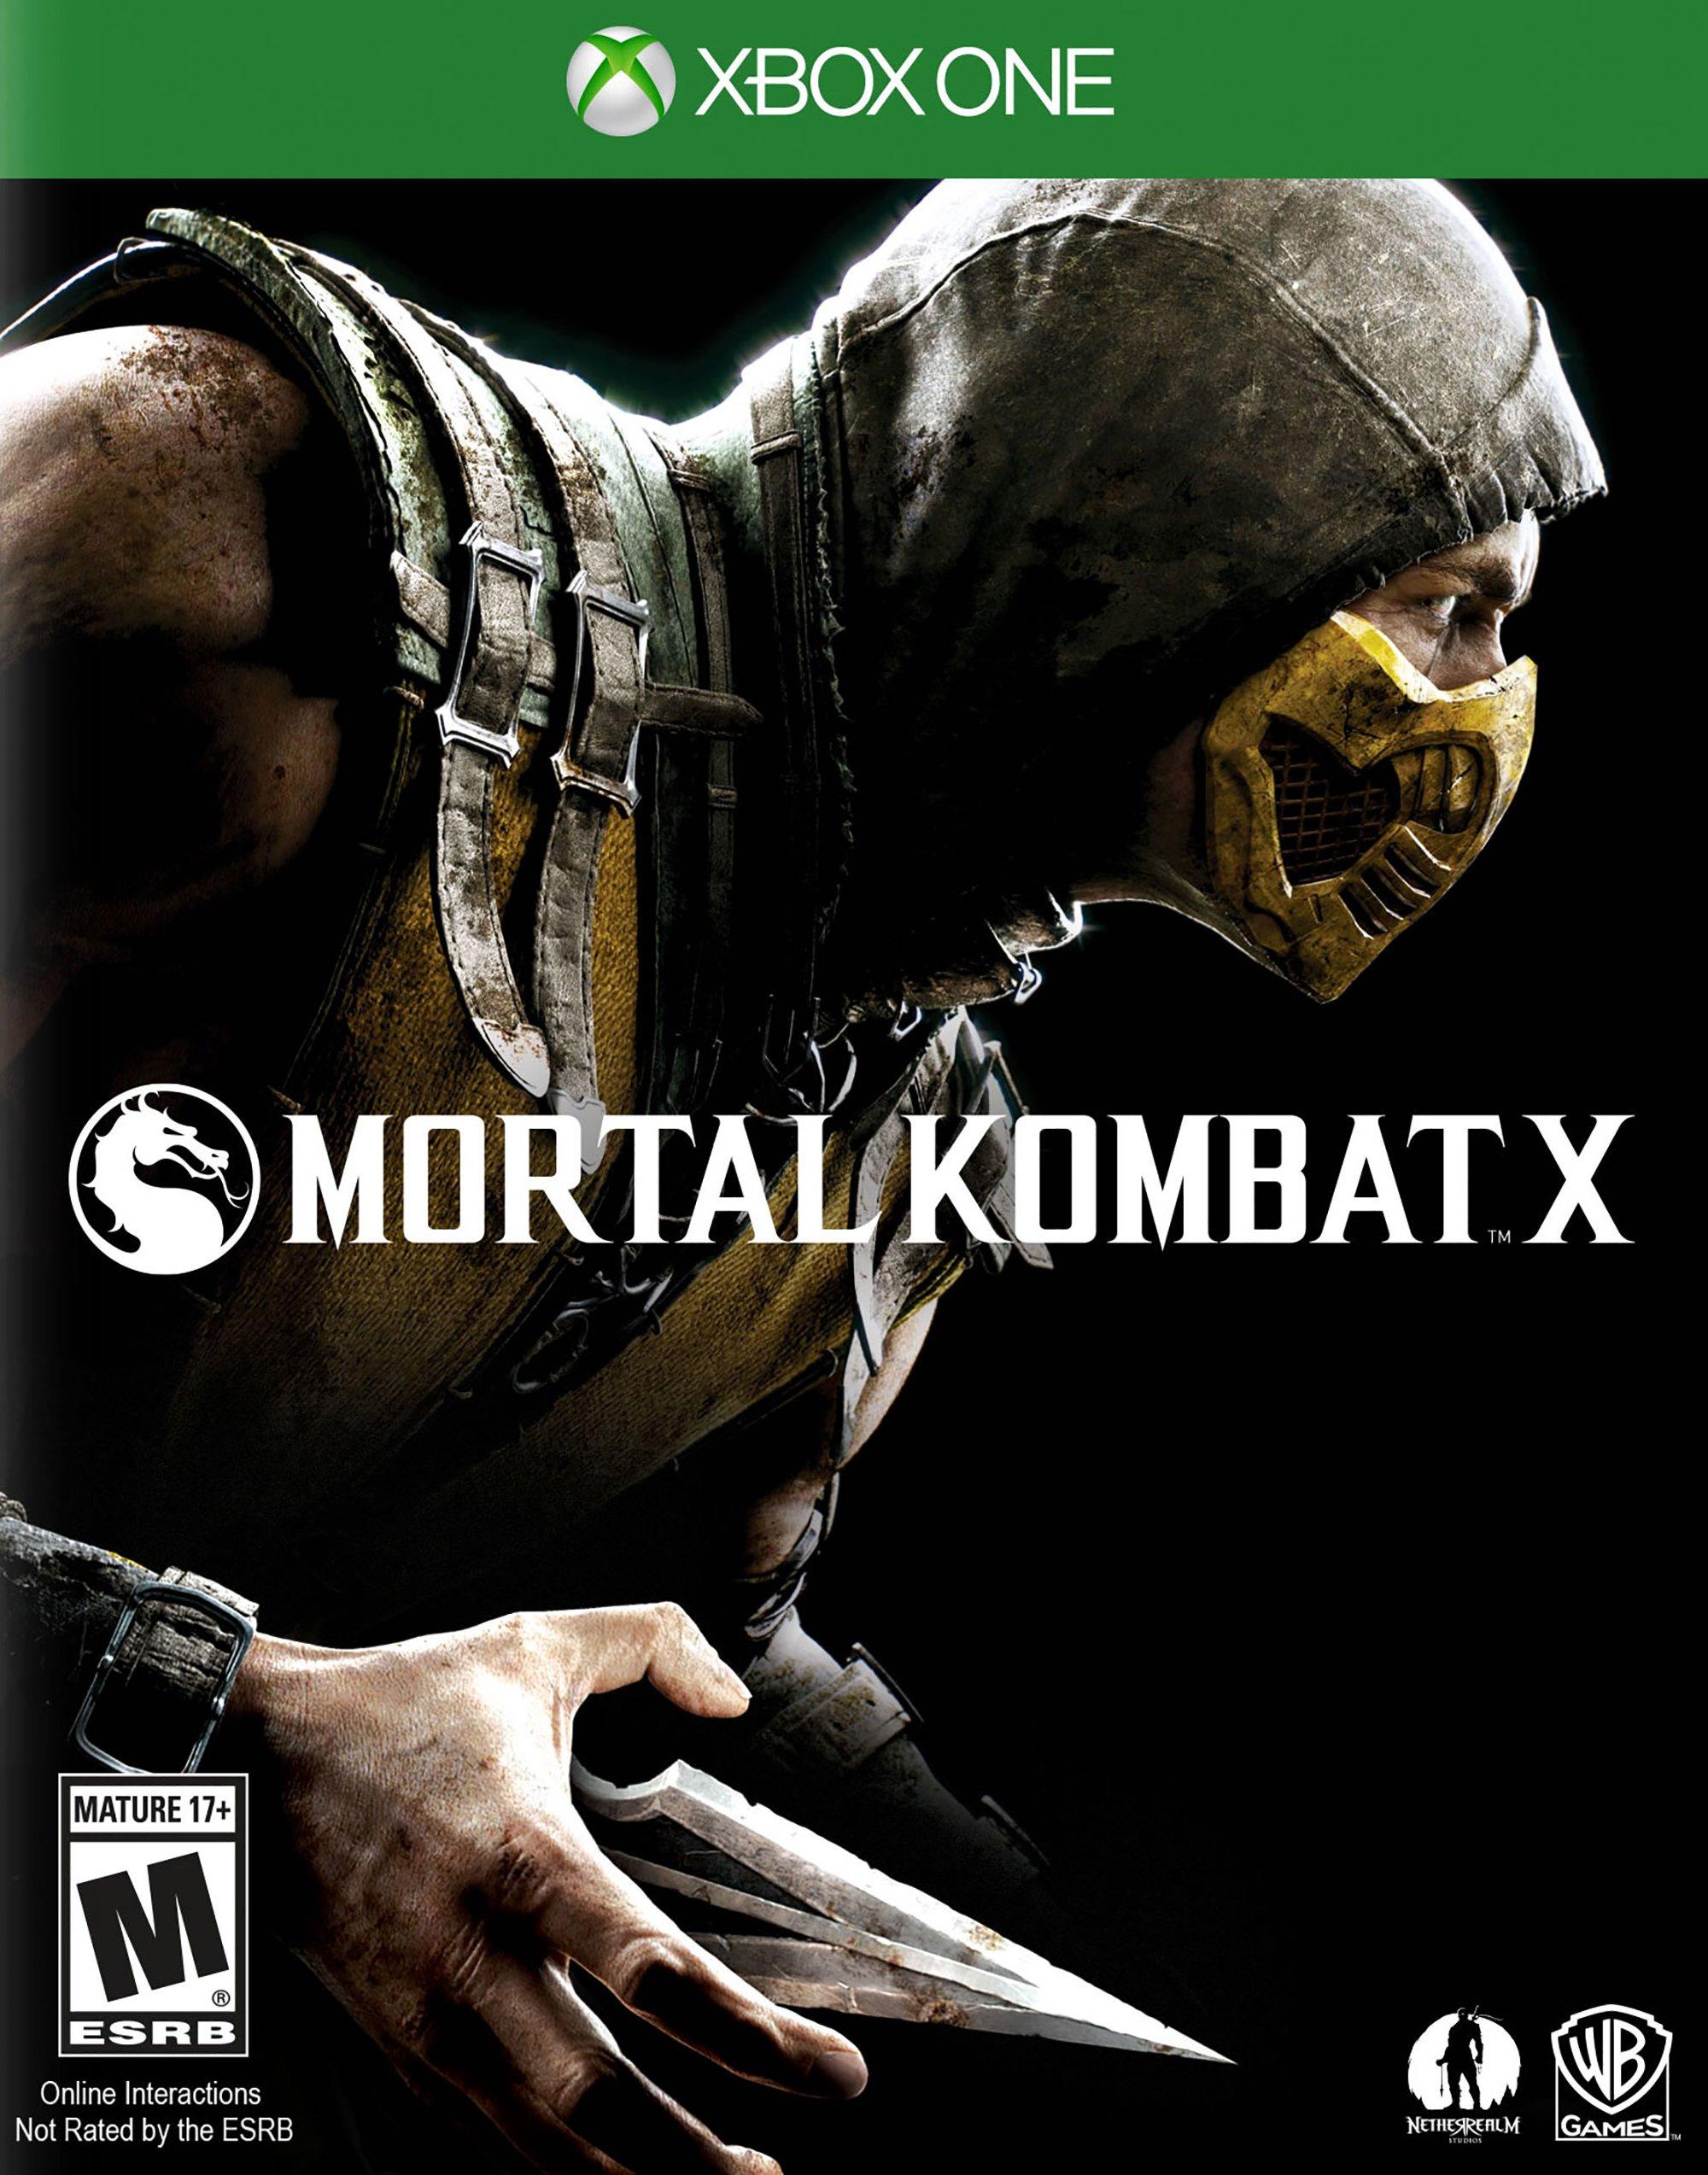 Mortal Kombat - Xbox 360 buy game